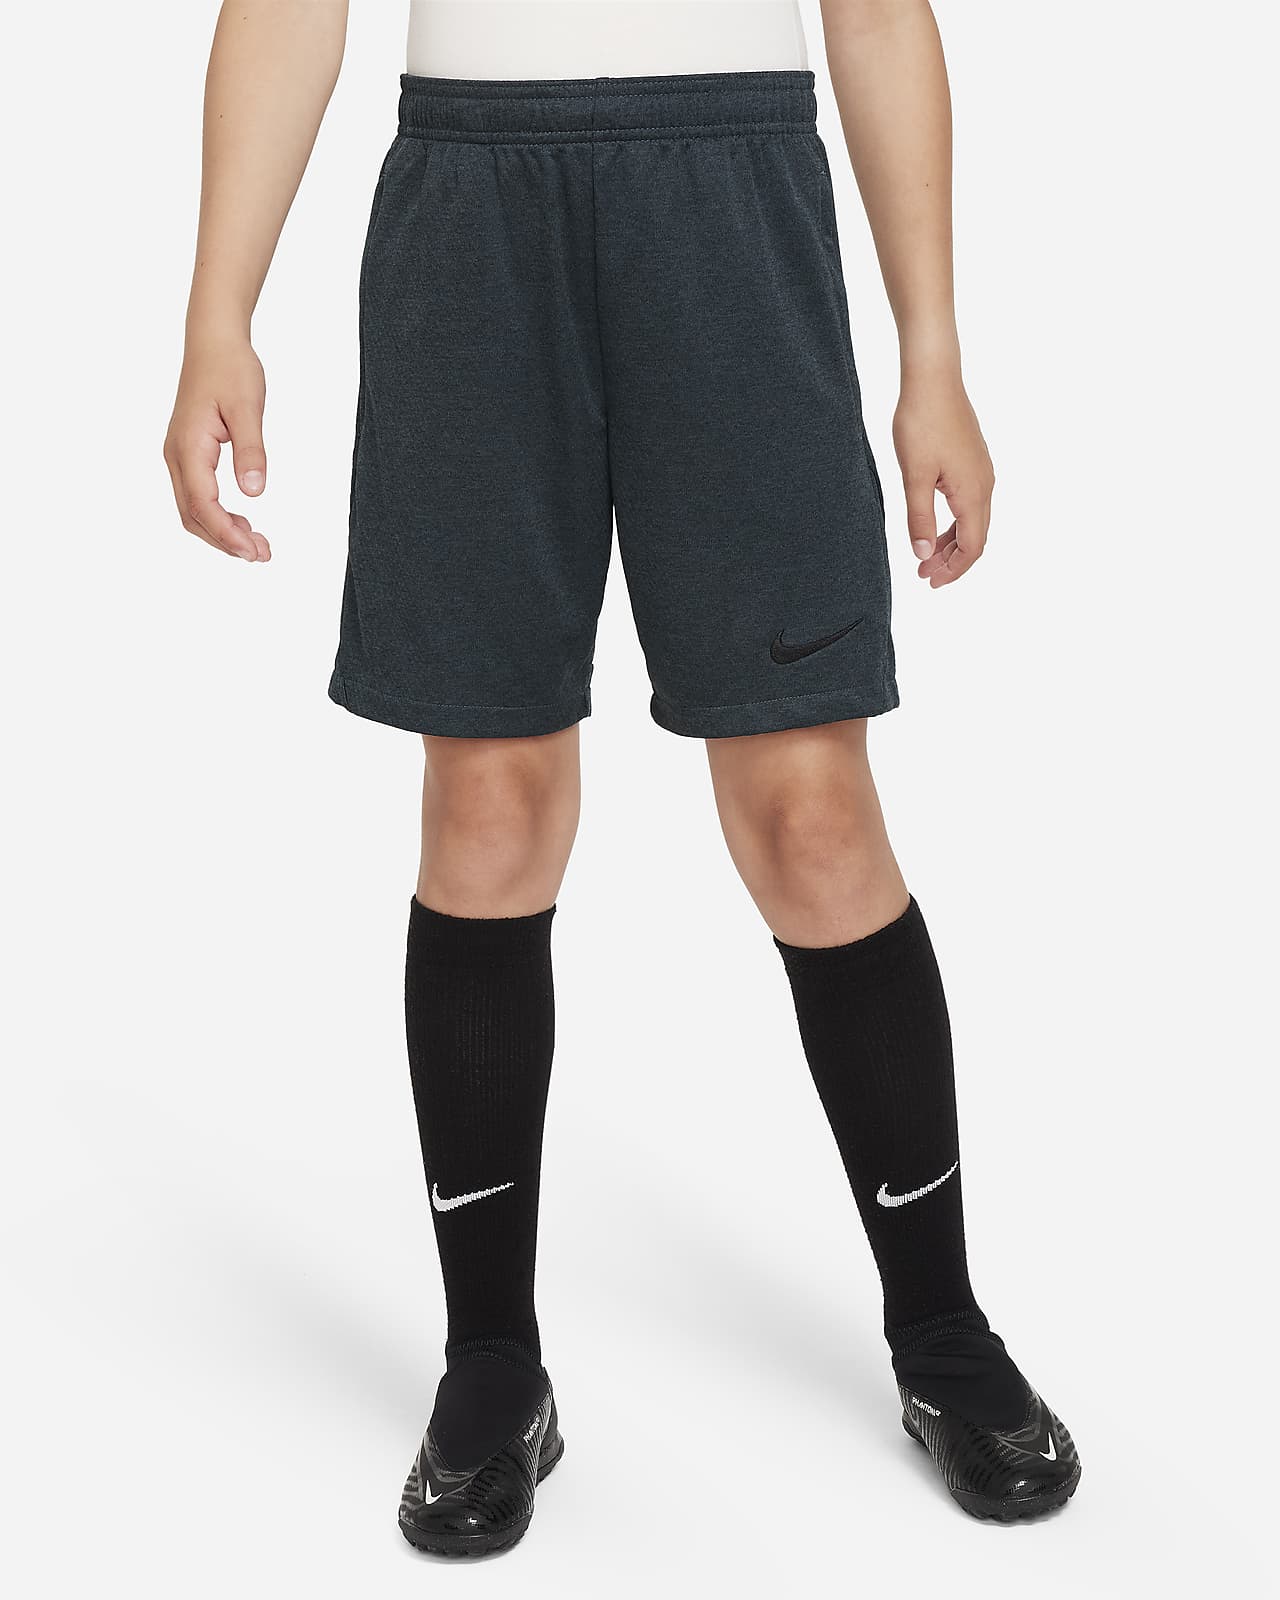 Kids\' Soccer Academy Big Nike Dri-FIT Shorts.